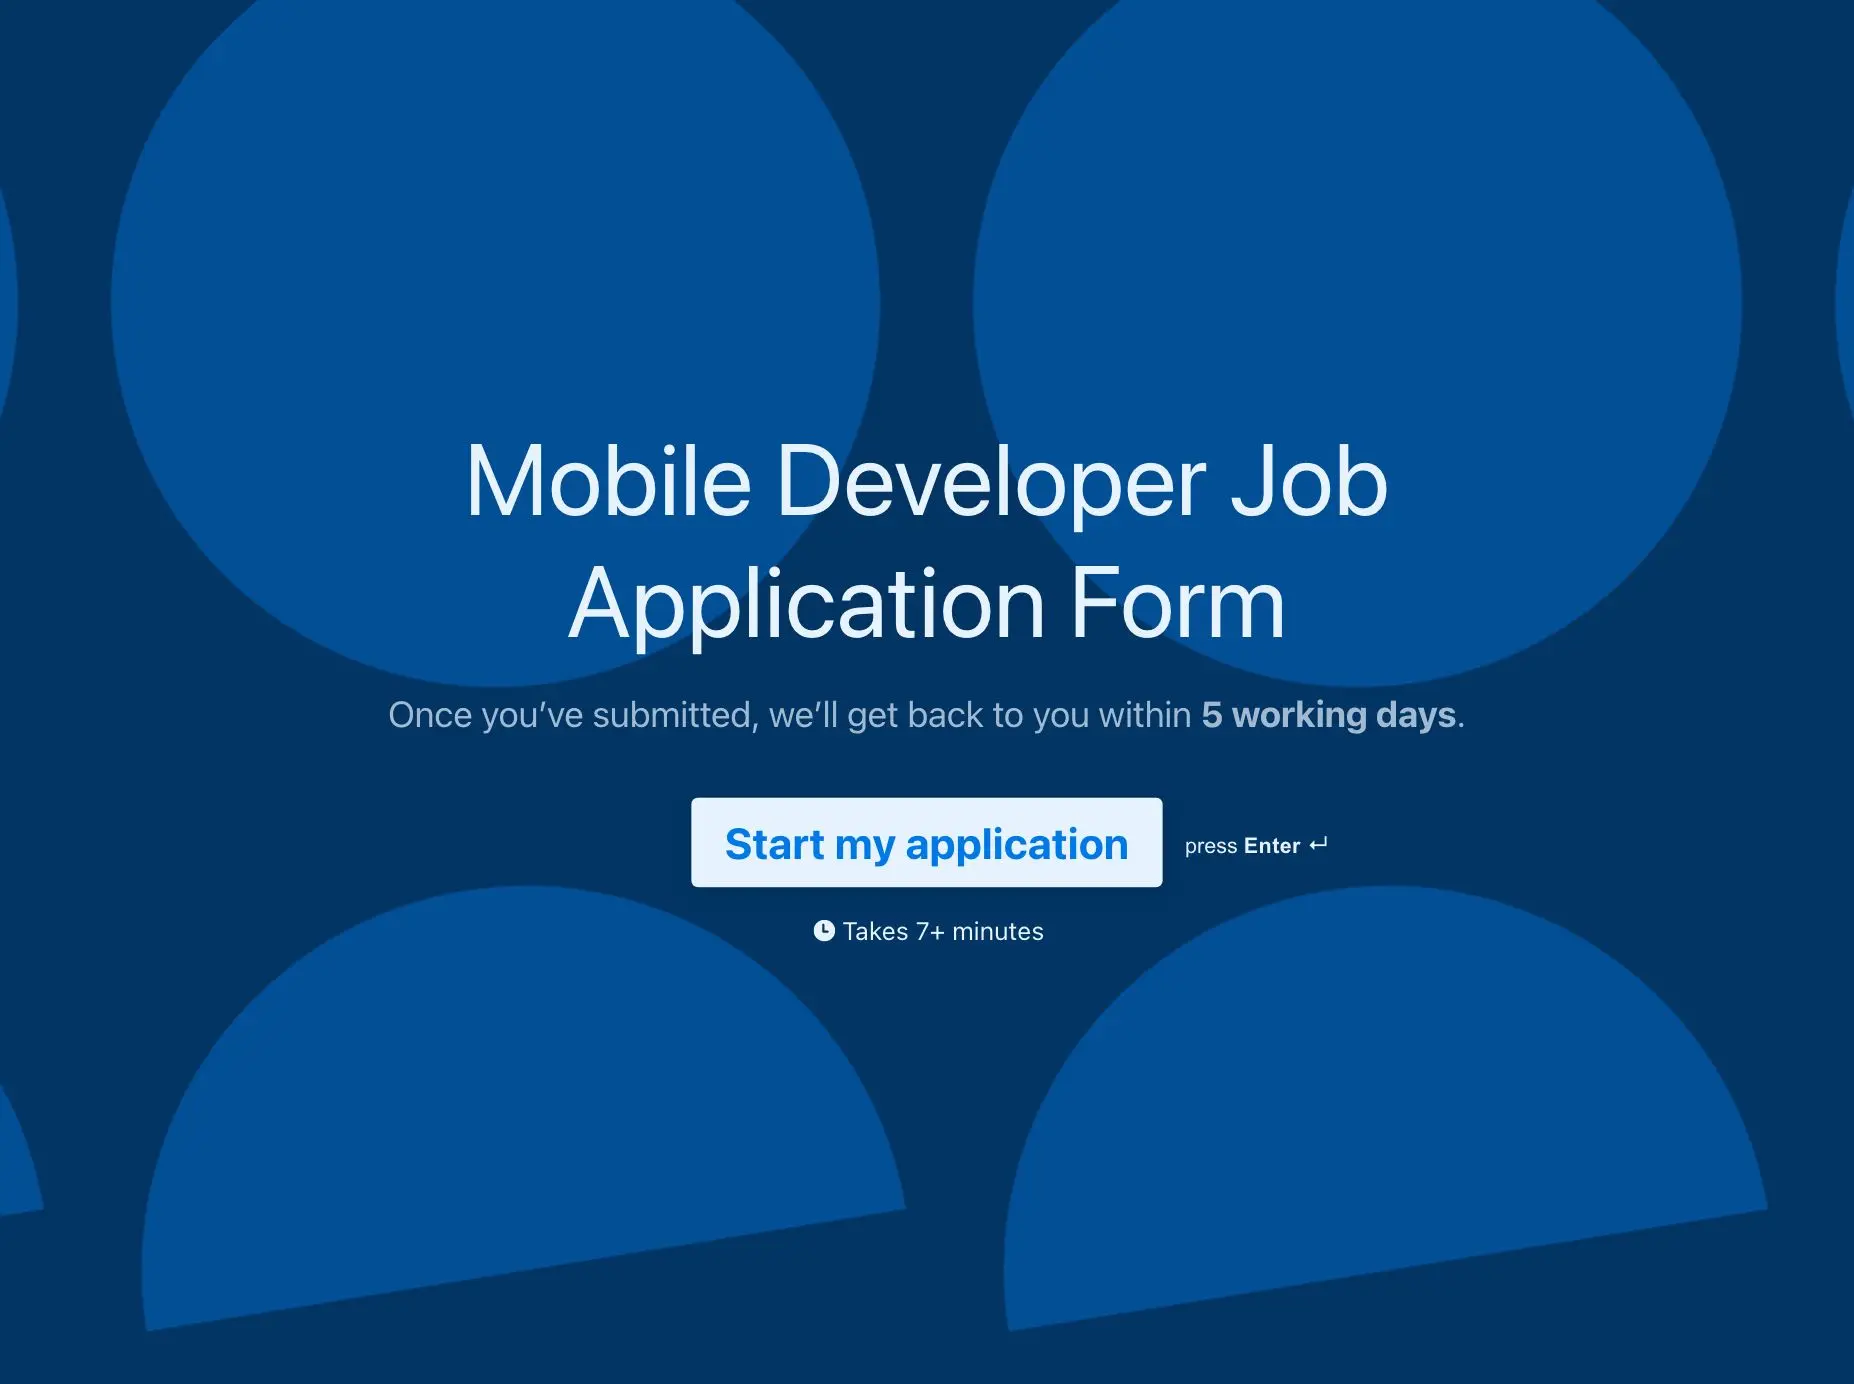 Mobile Developer Job Application Form Template Hero